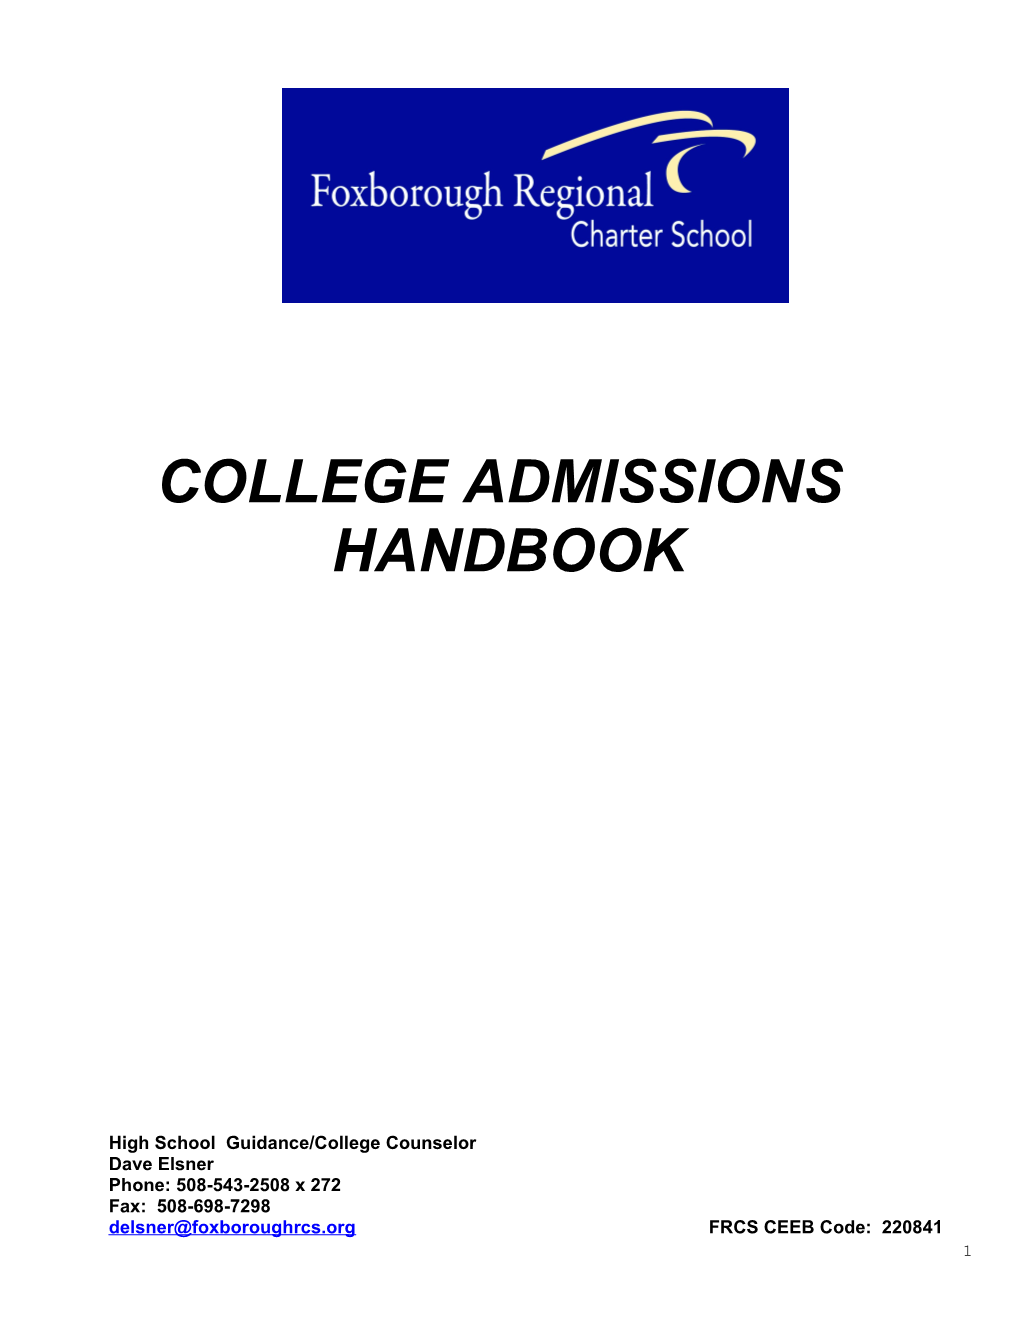 College Board Examinations 1999-2000